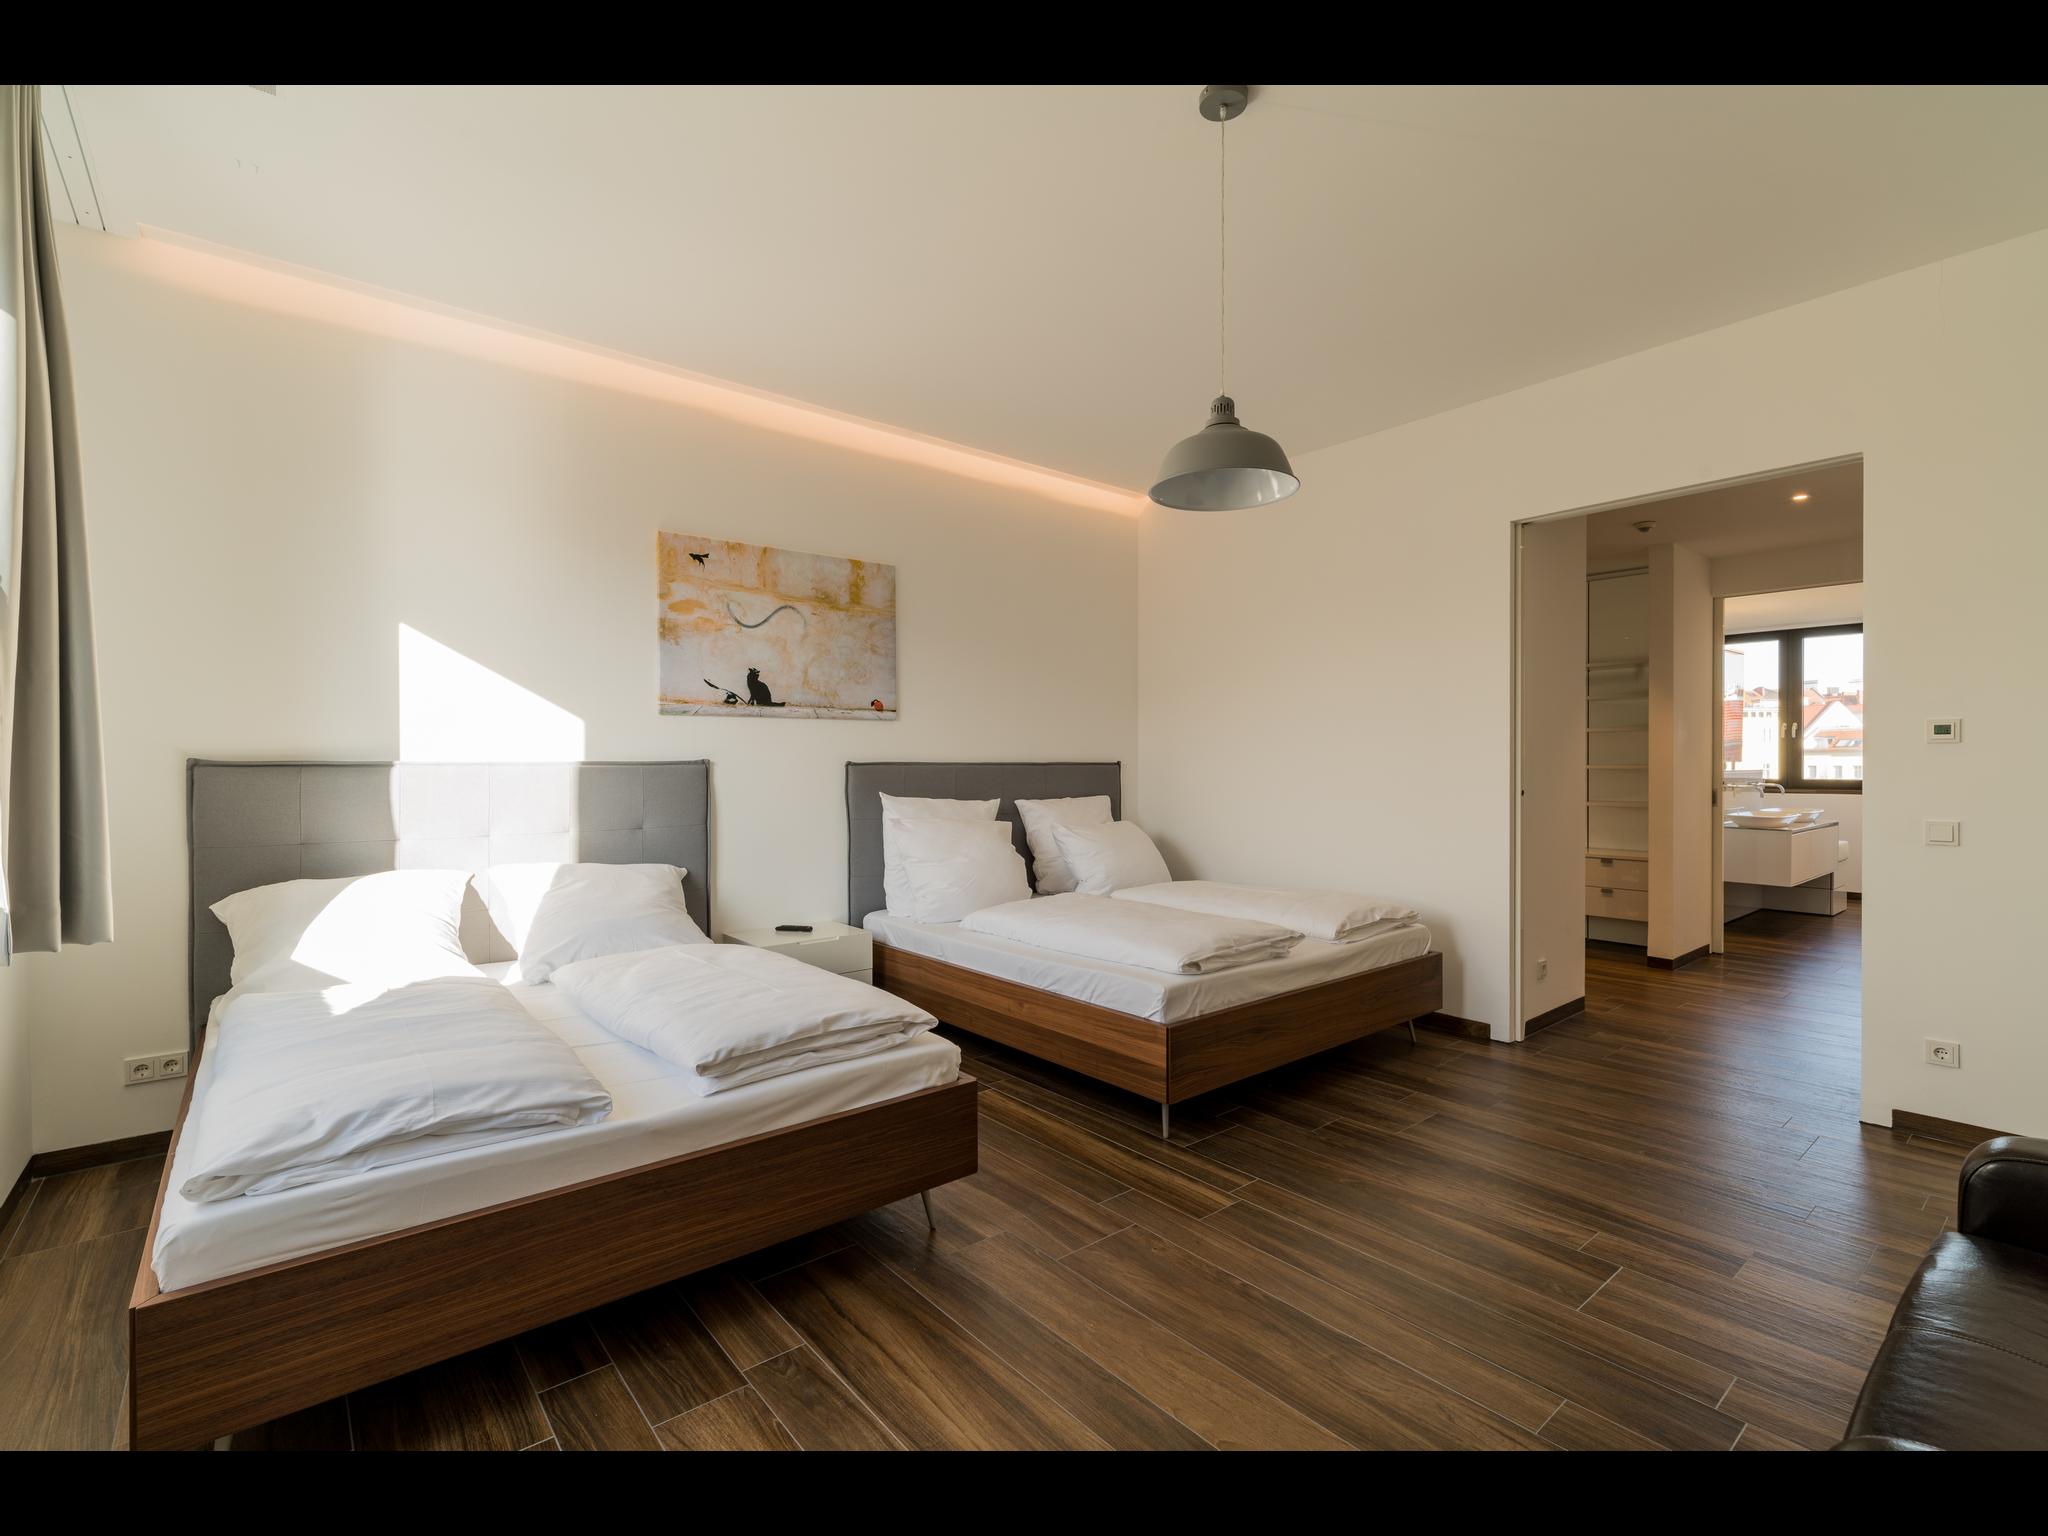 Ackerstrasse - Exclusive apartment in Berlin